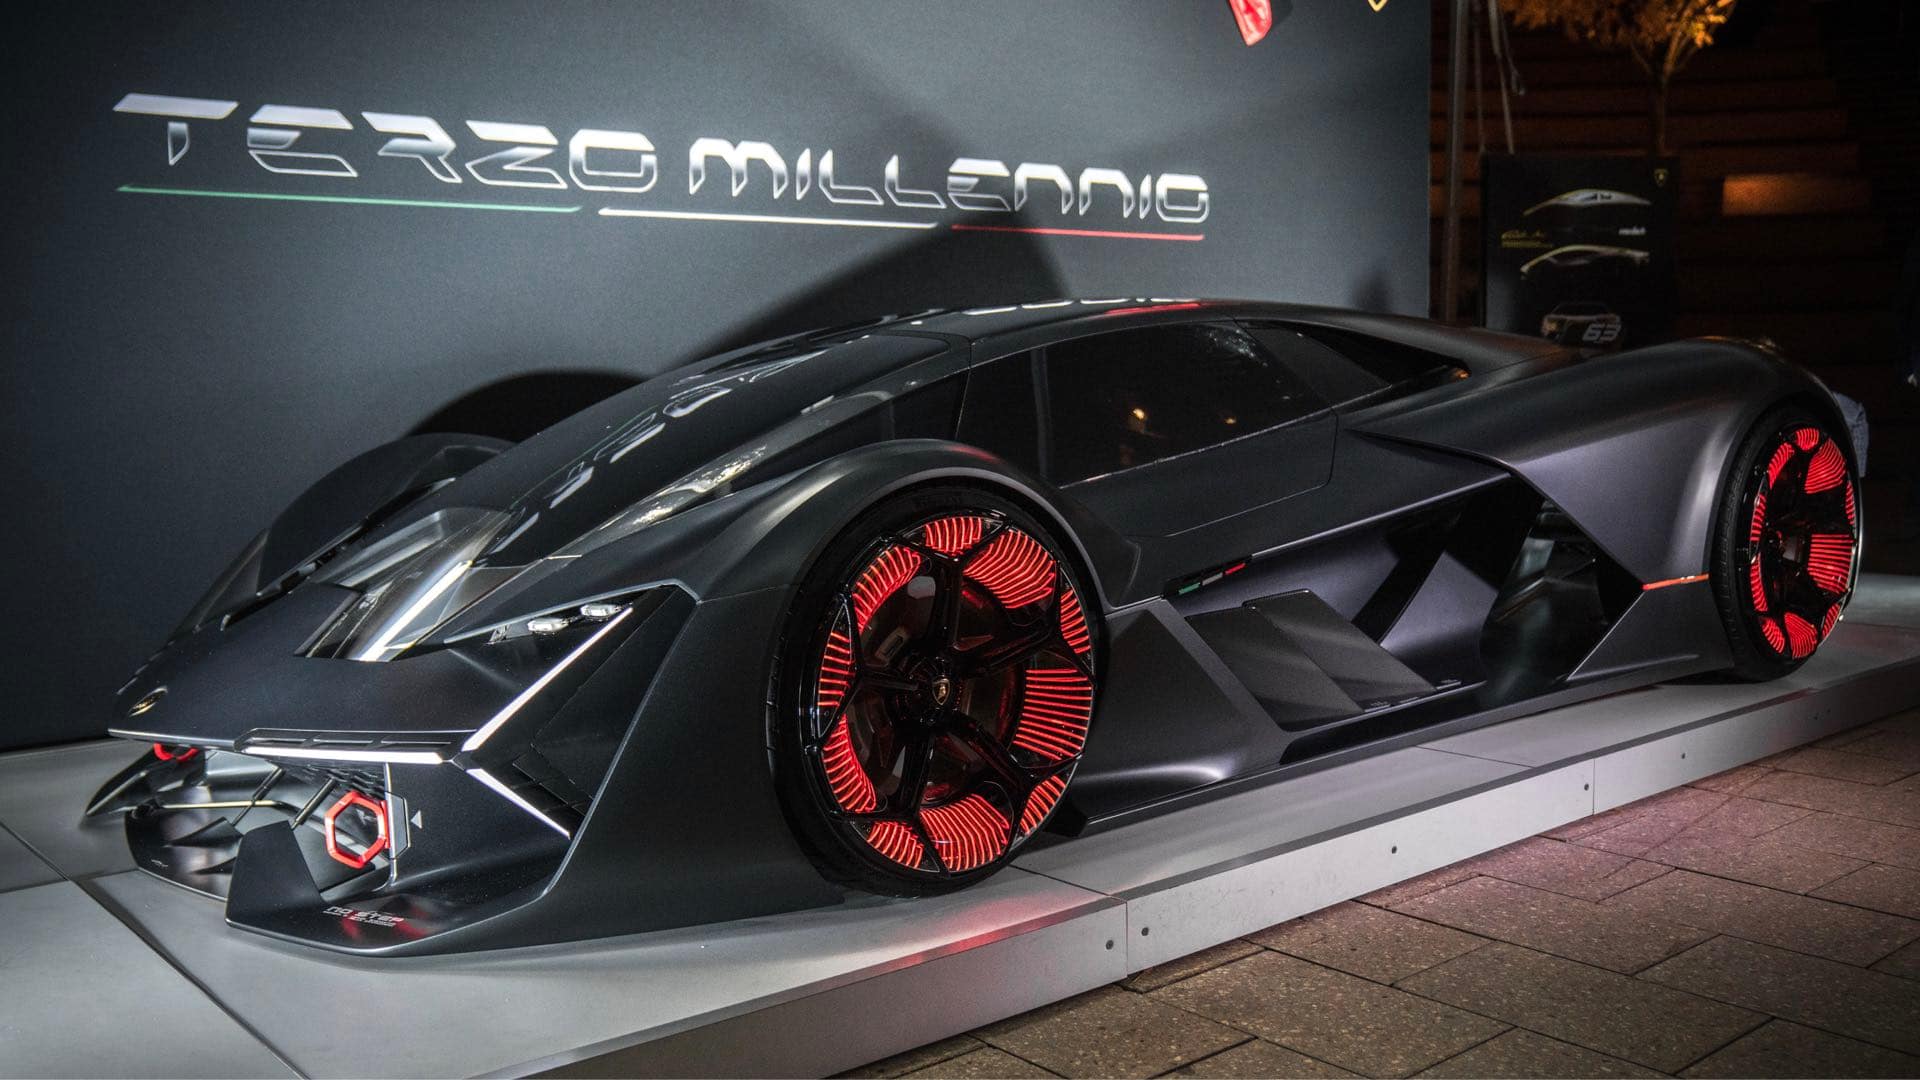 Lamborghini unveils the Future Sports Car at EmTech MIT